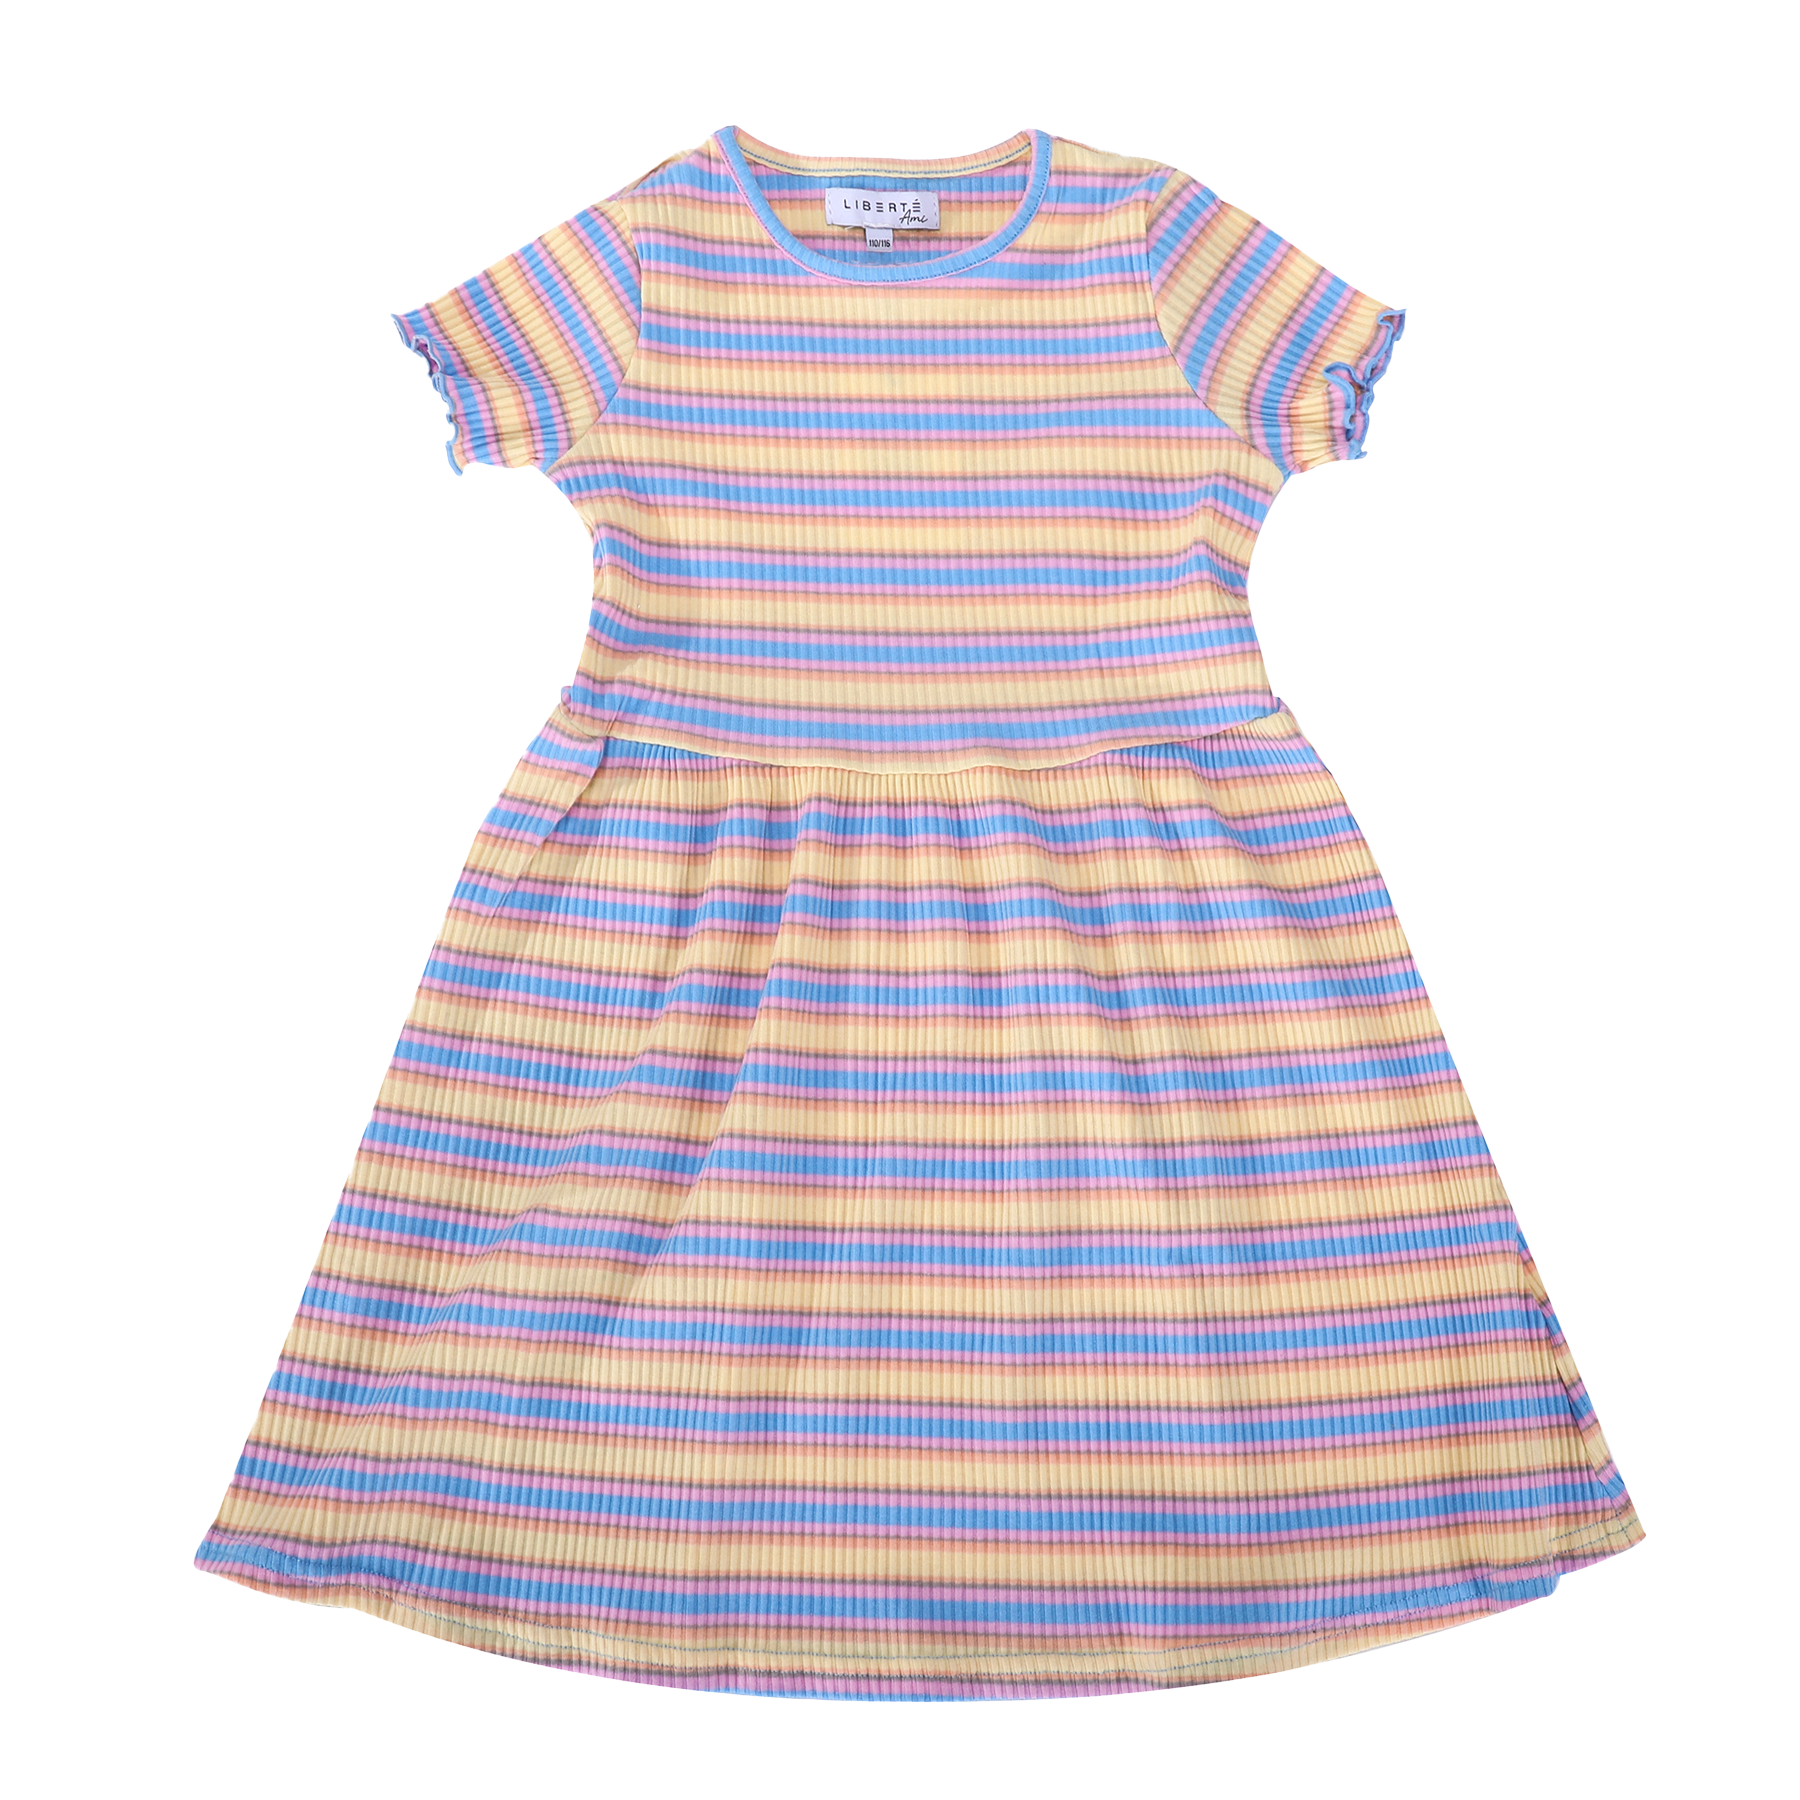 Liberté - Natalia KIDS SS Dress, 21233 - Yellow Rose Blue Stripe